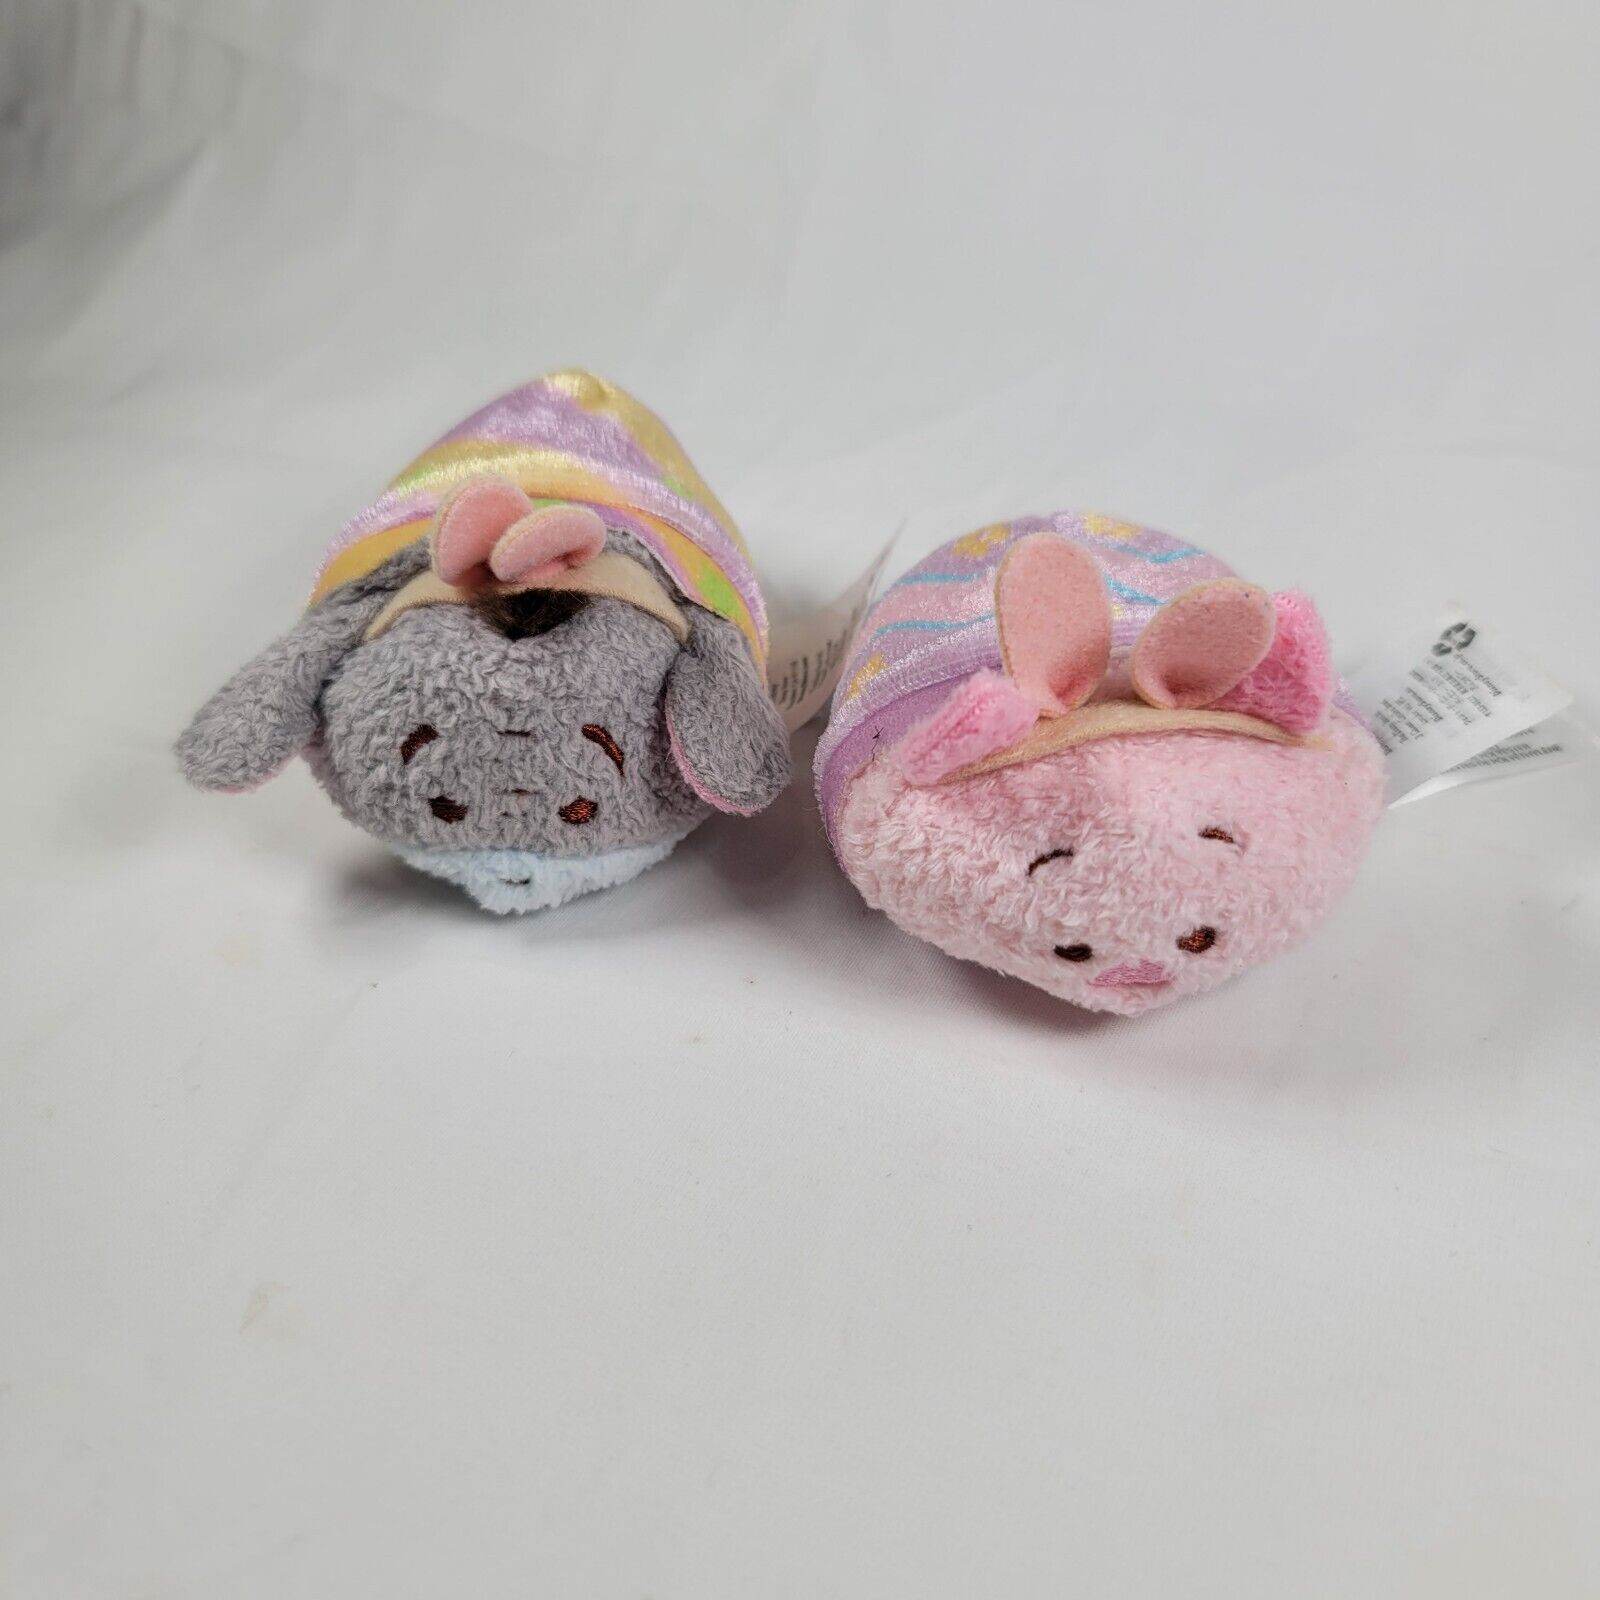 Disney Store Tsum Tsum Plush Minis - Winnie The Pooh Characters (Piglet, Eeyore)